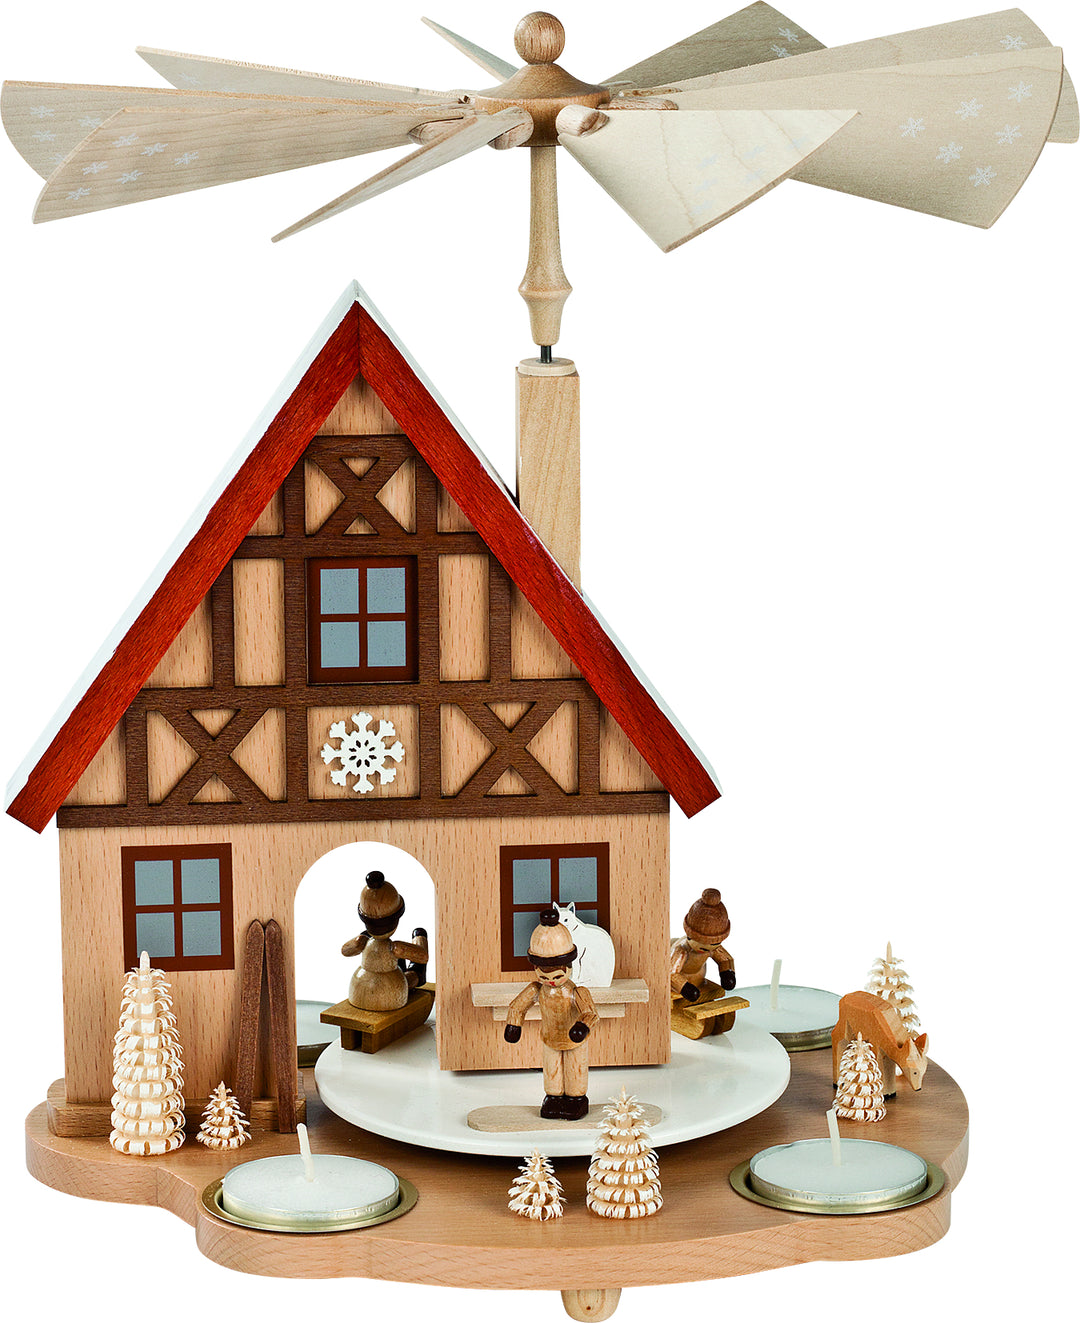 Glässer Λαϊκή Τέχνη 'Table Pyramid House Winter Children' 29cm